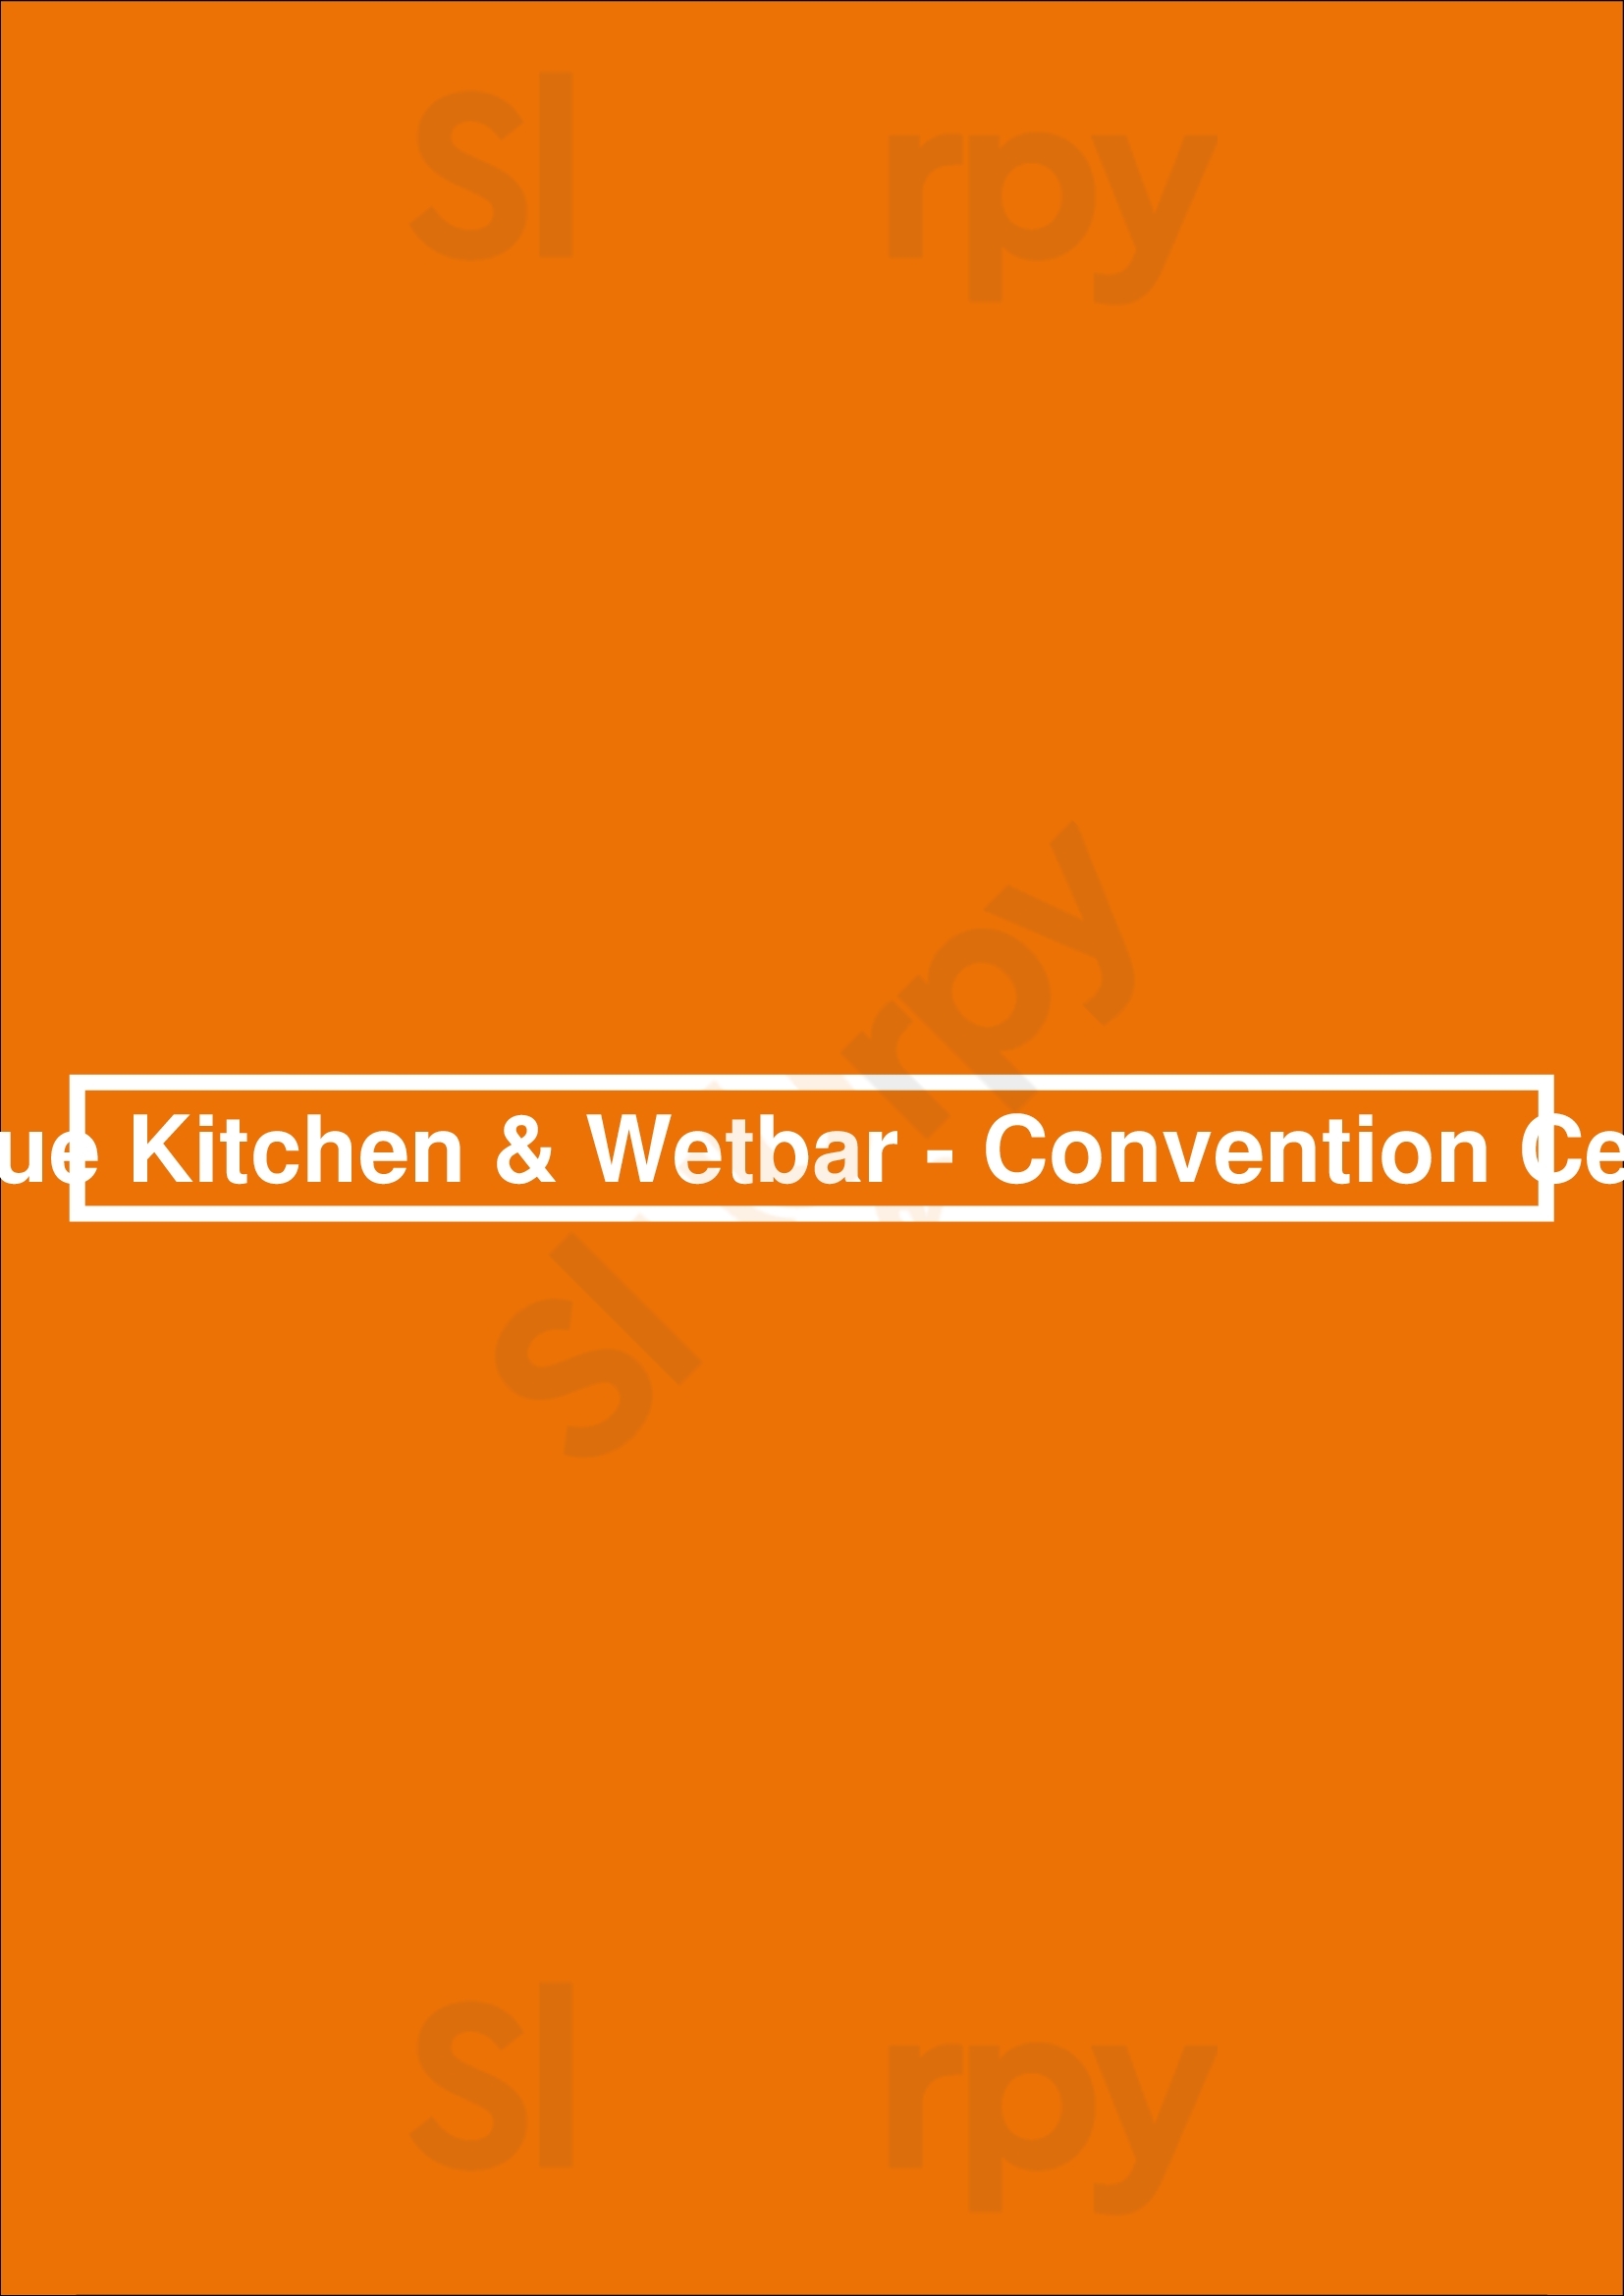 Rogue Kitchen & Wetbar - Convention Centre Vancouver Menu - 1